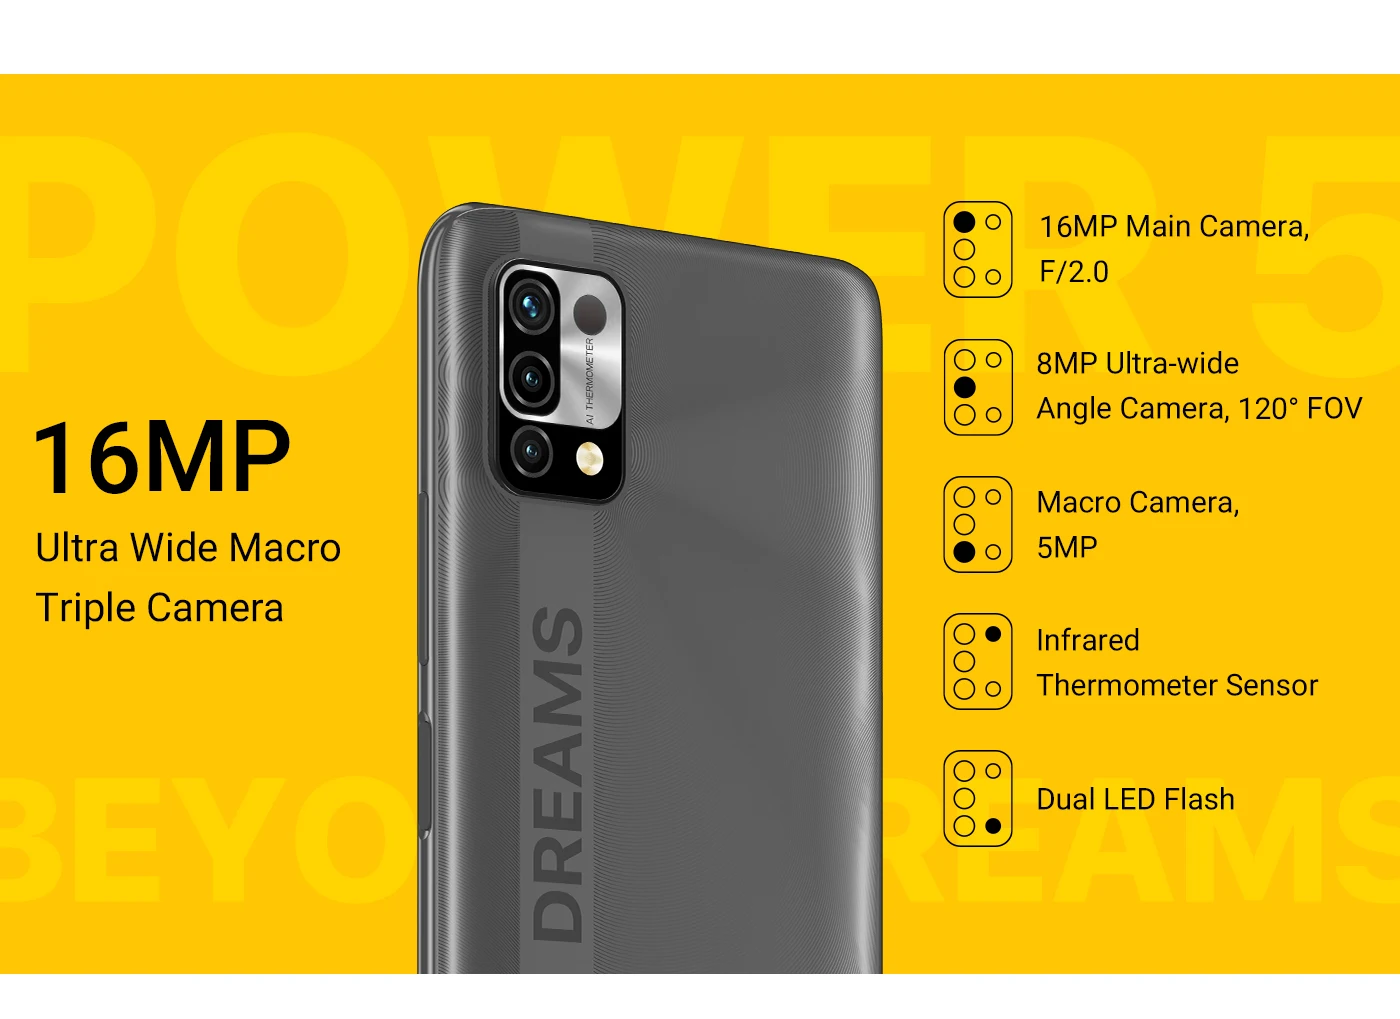 UMIDIGI Power 5 Global Version Smartphone Android 11 Helio G25 16MP AI Triple Camera 6150mAh 6.53'' Full Screen